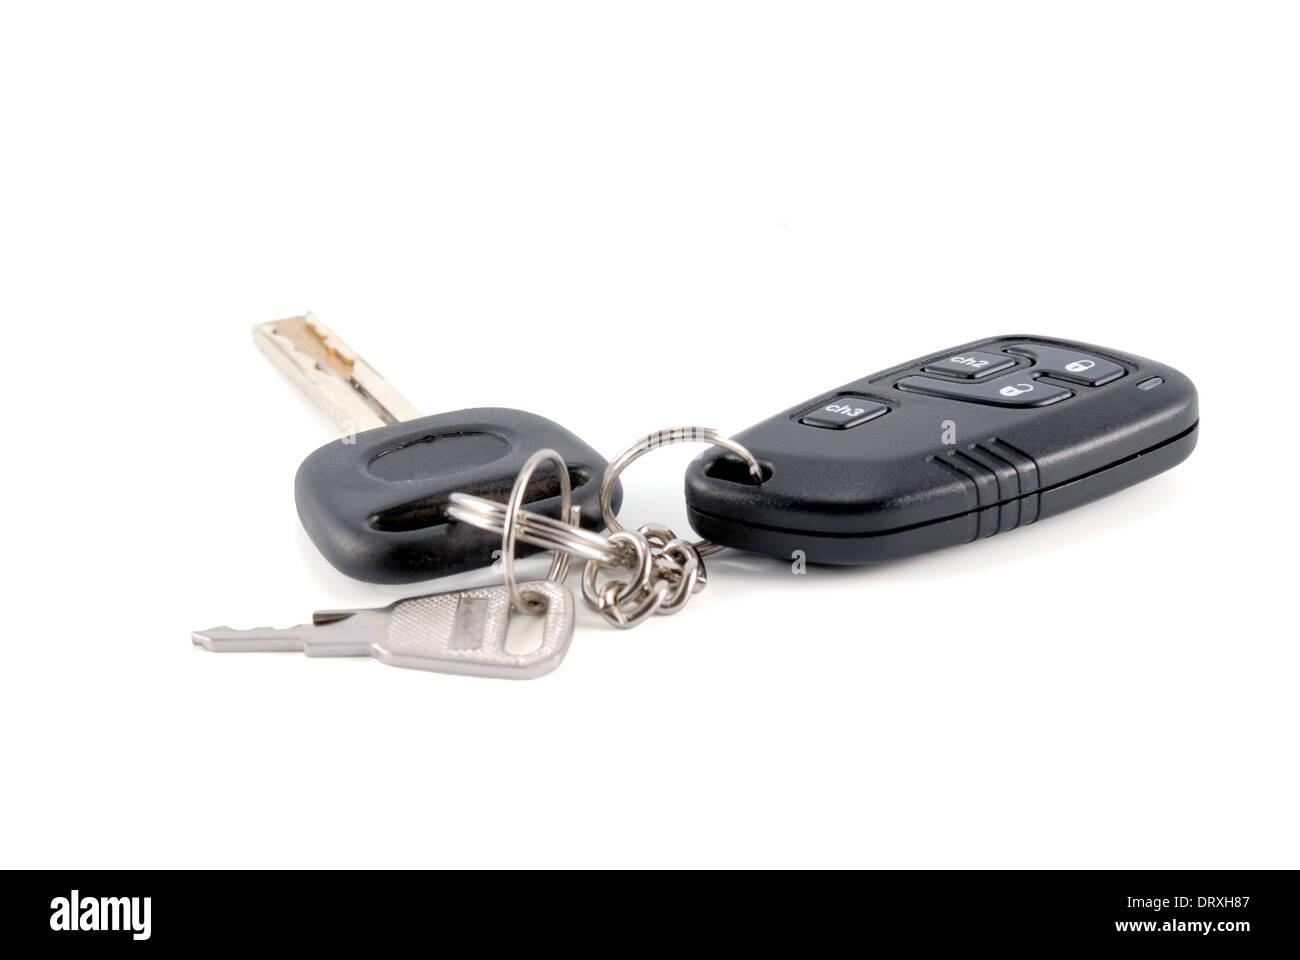 Car keys and charm from car alarm system Stock Photo